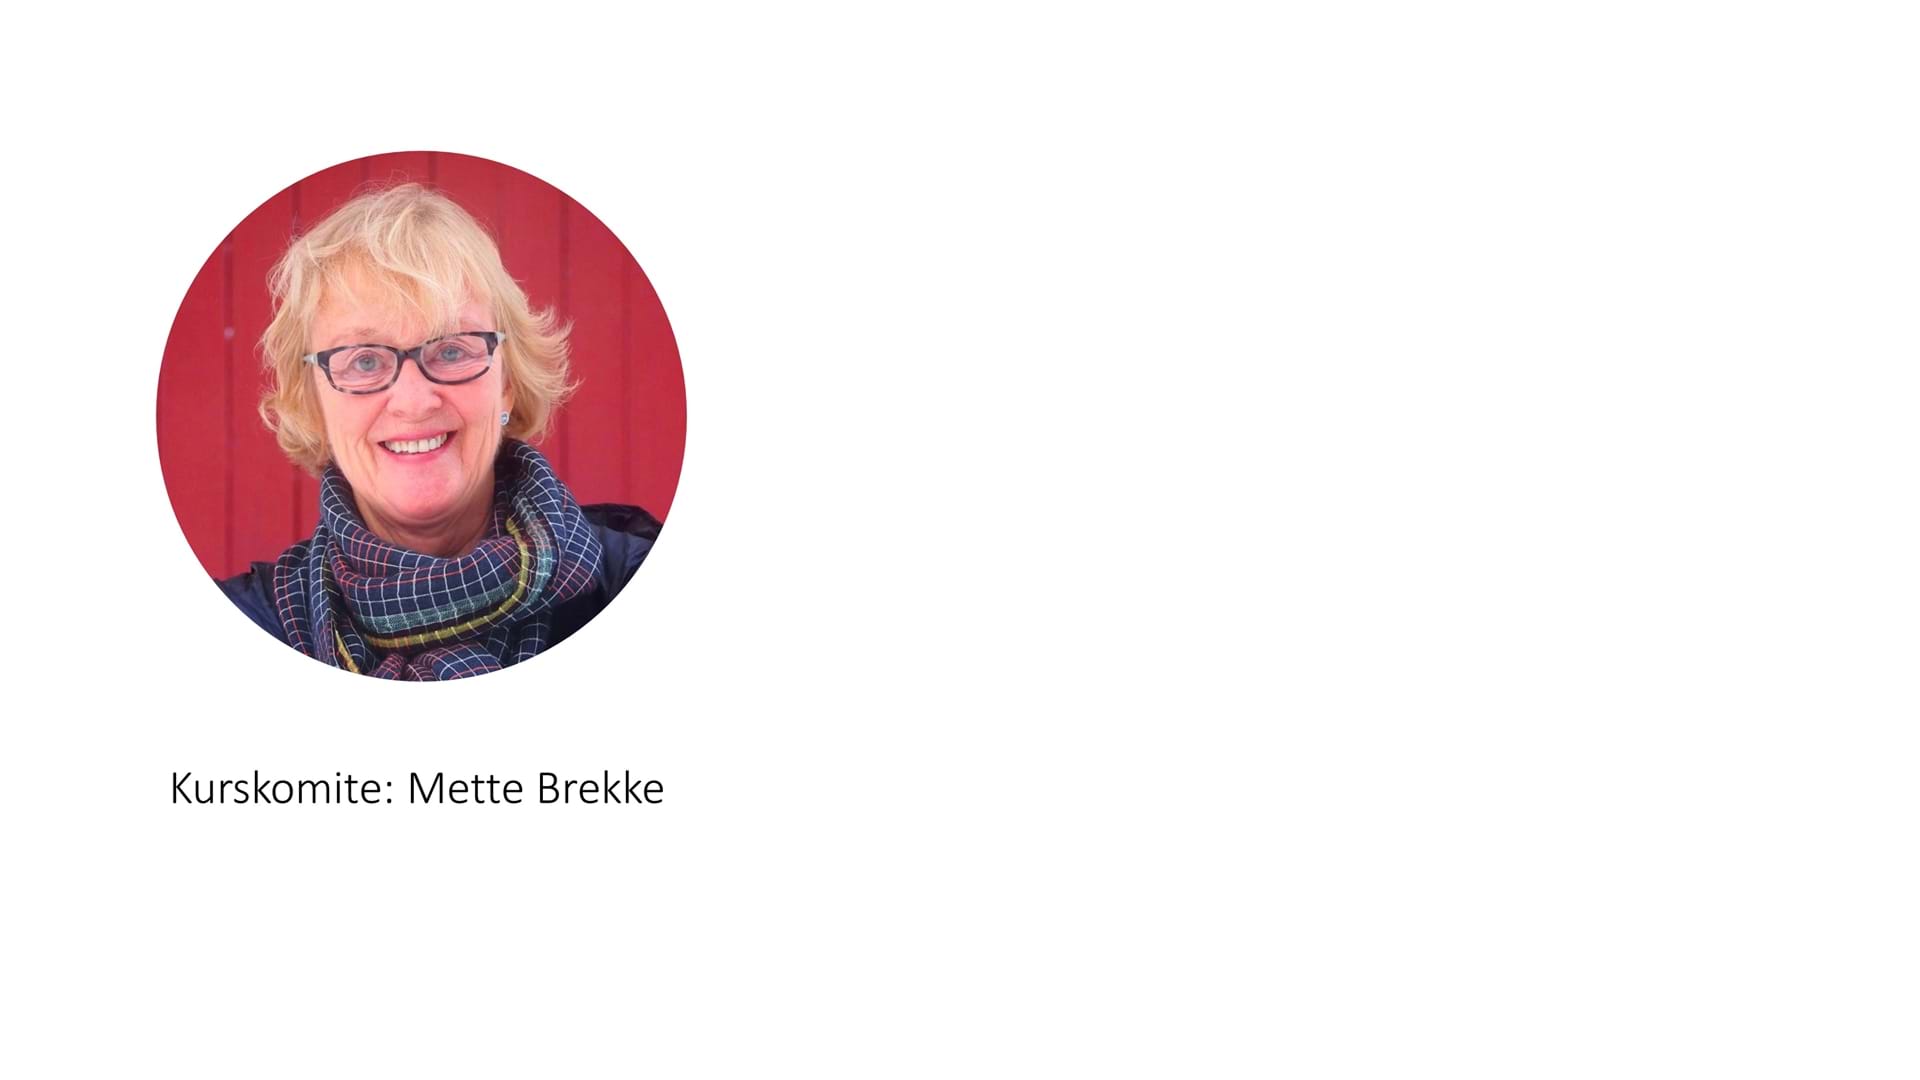 Mette Brekke